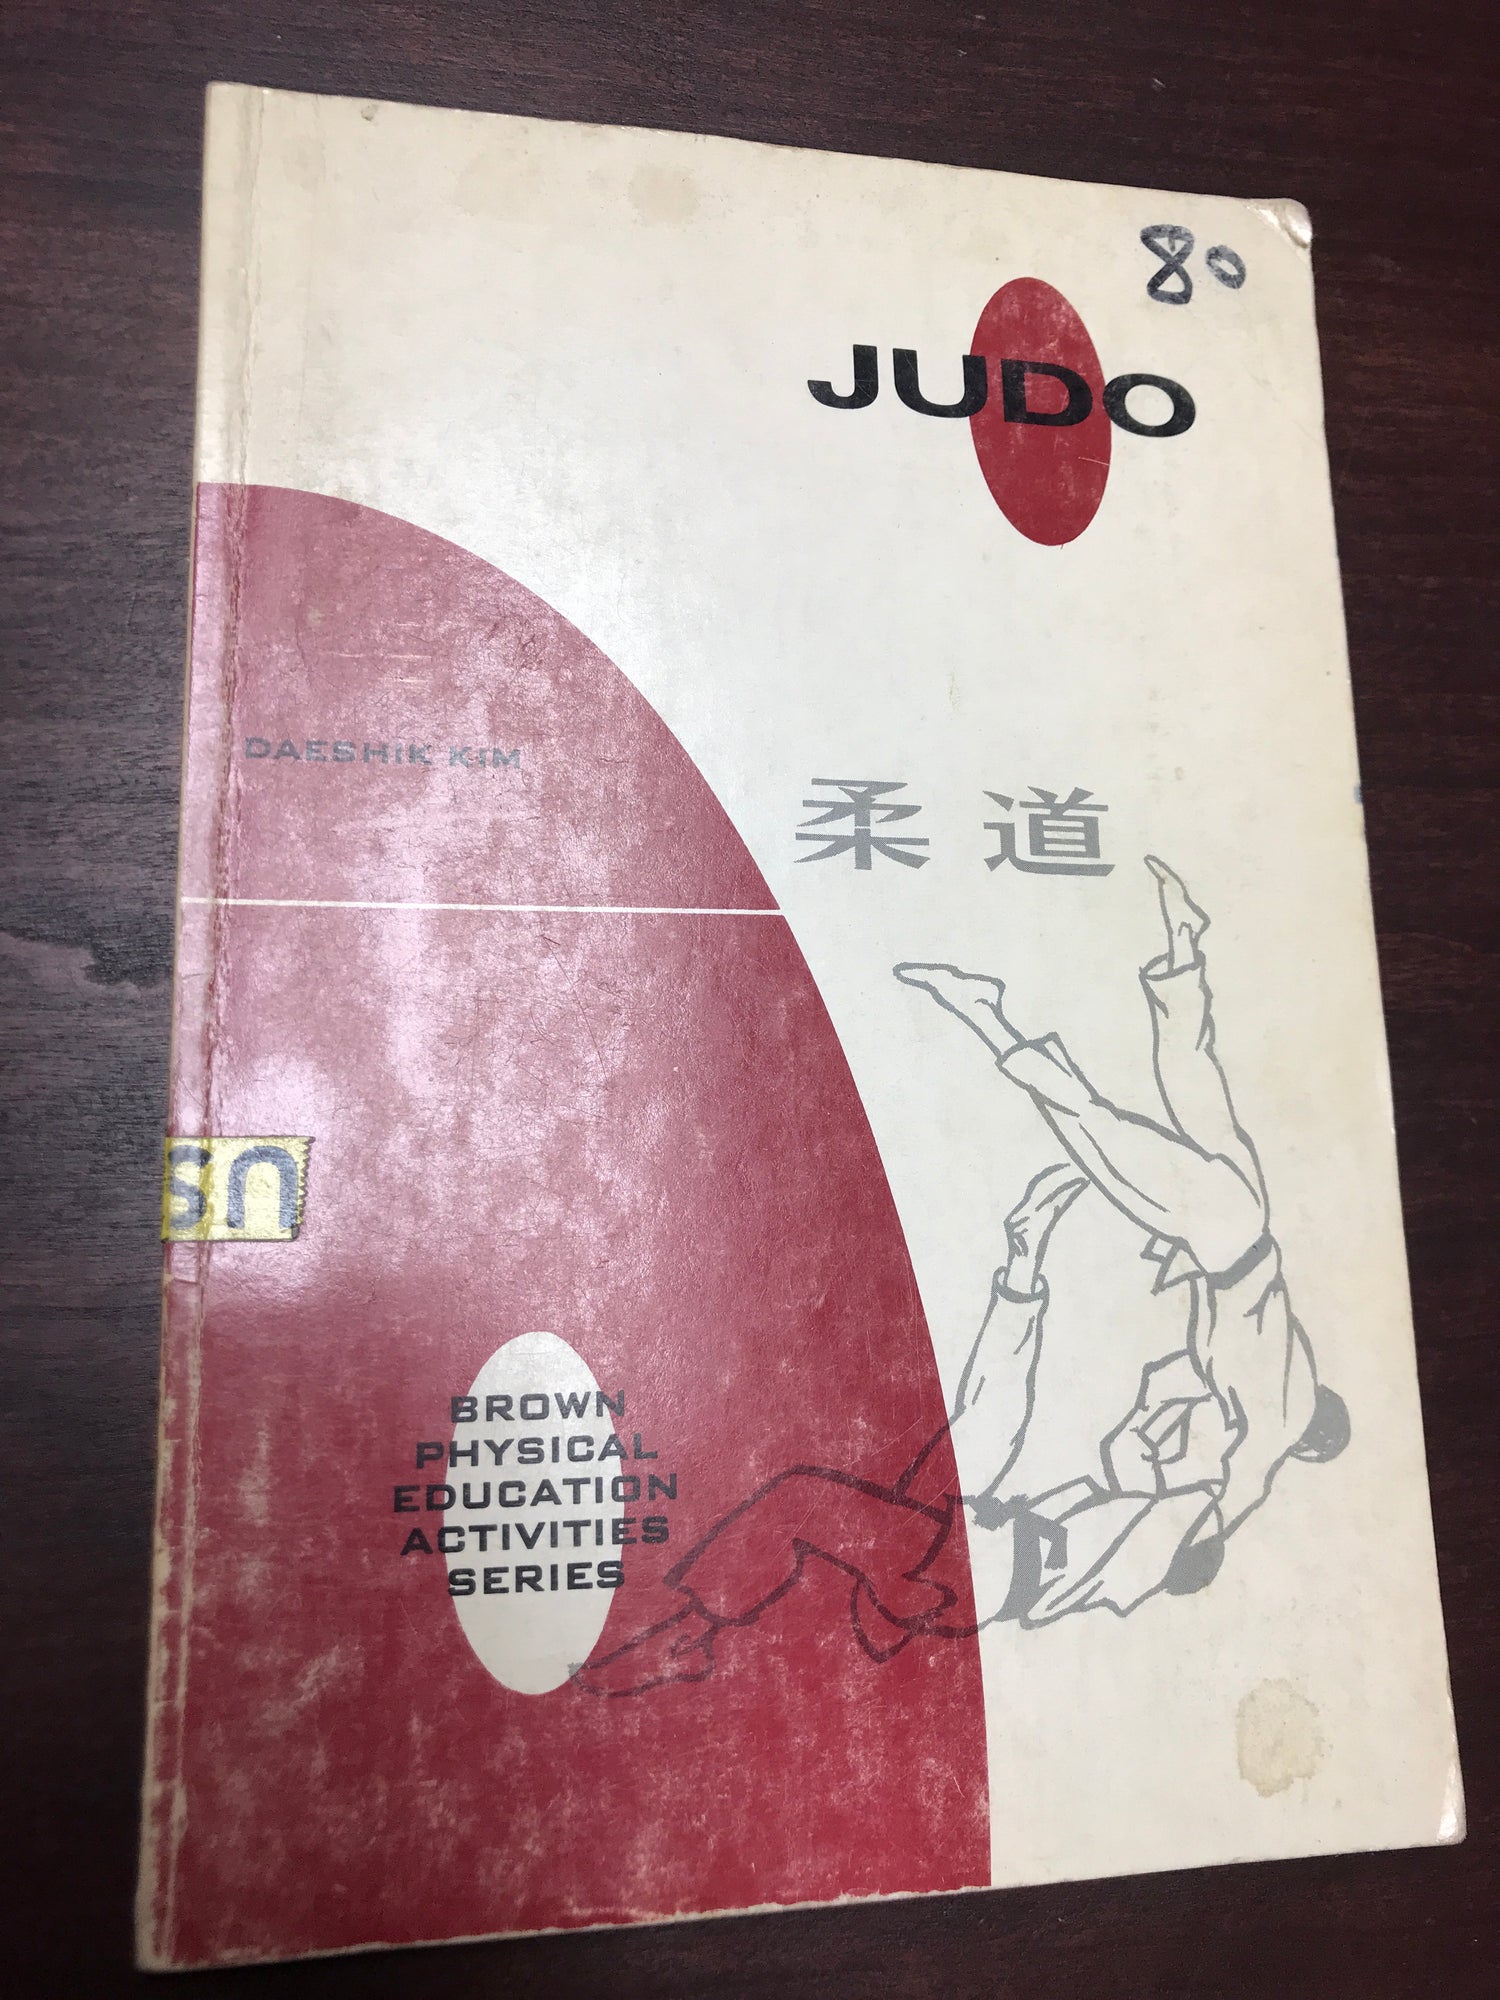 Judo Book by Daeshik Kim (Preowned) - Budovideos Inc